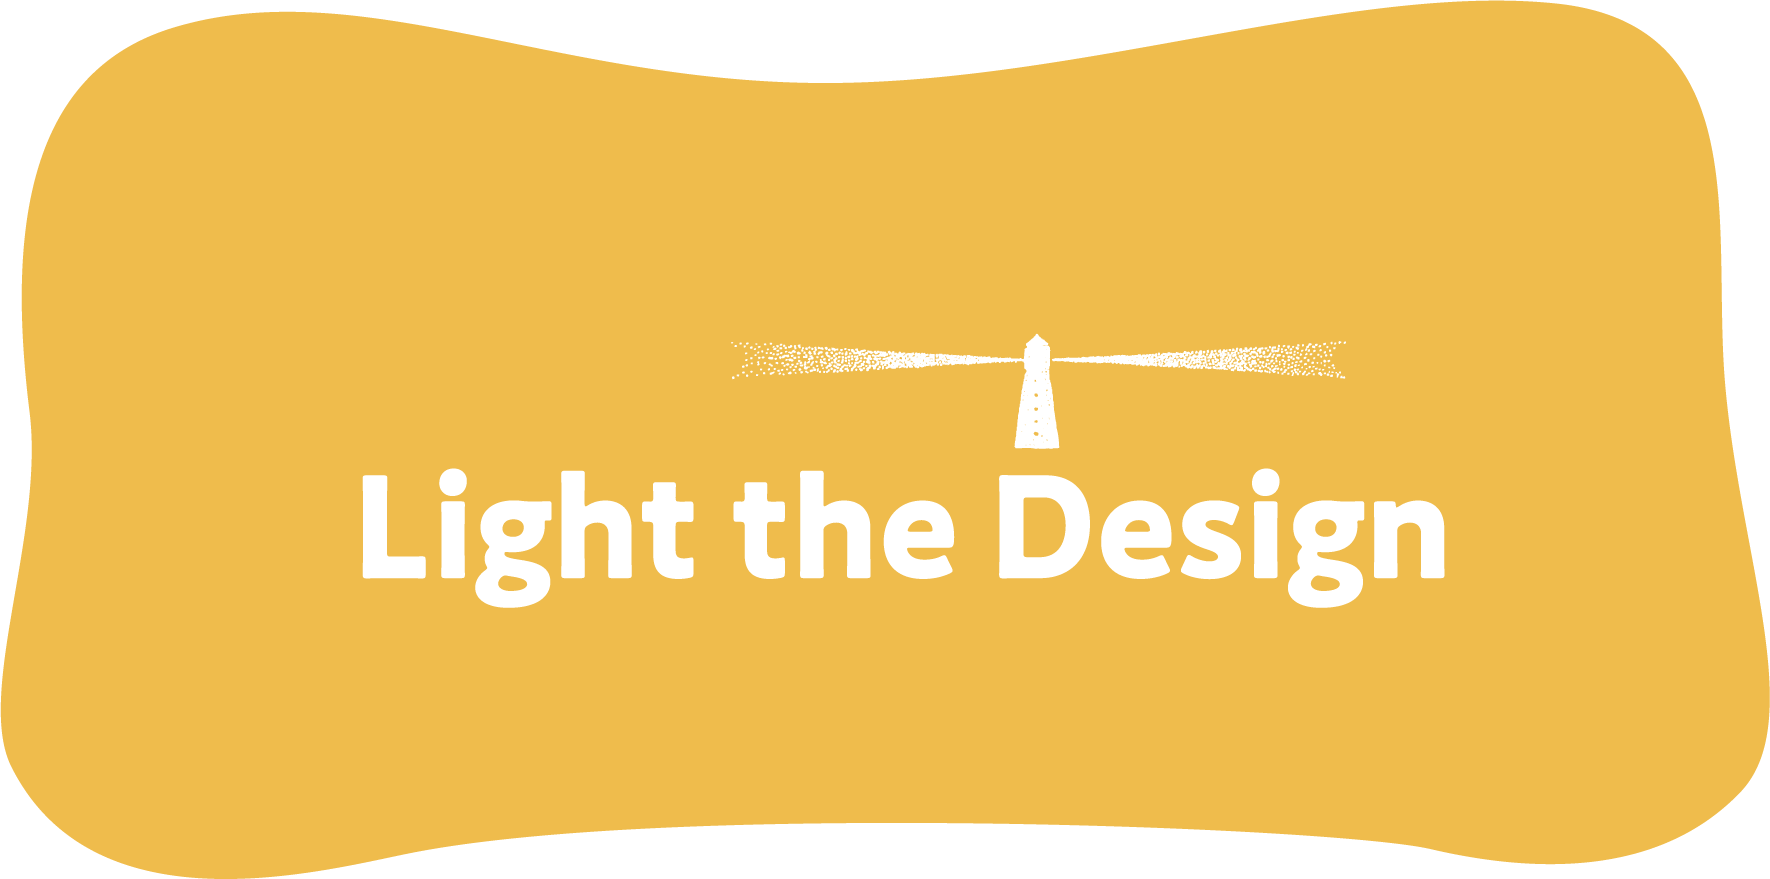 Light the Design